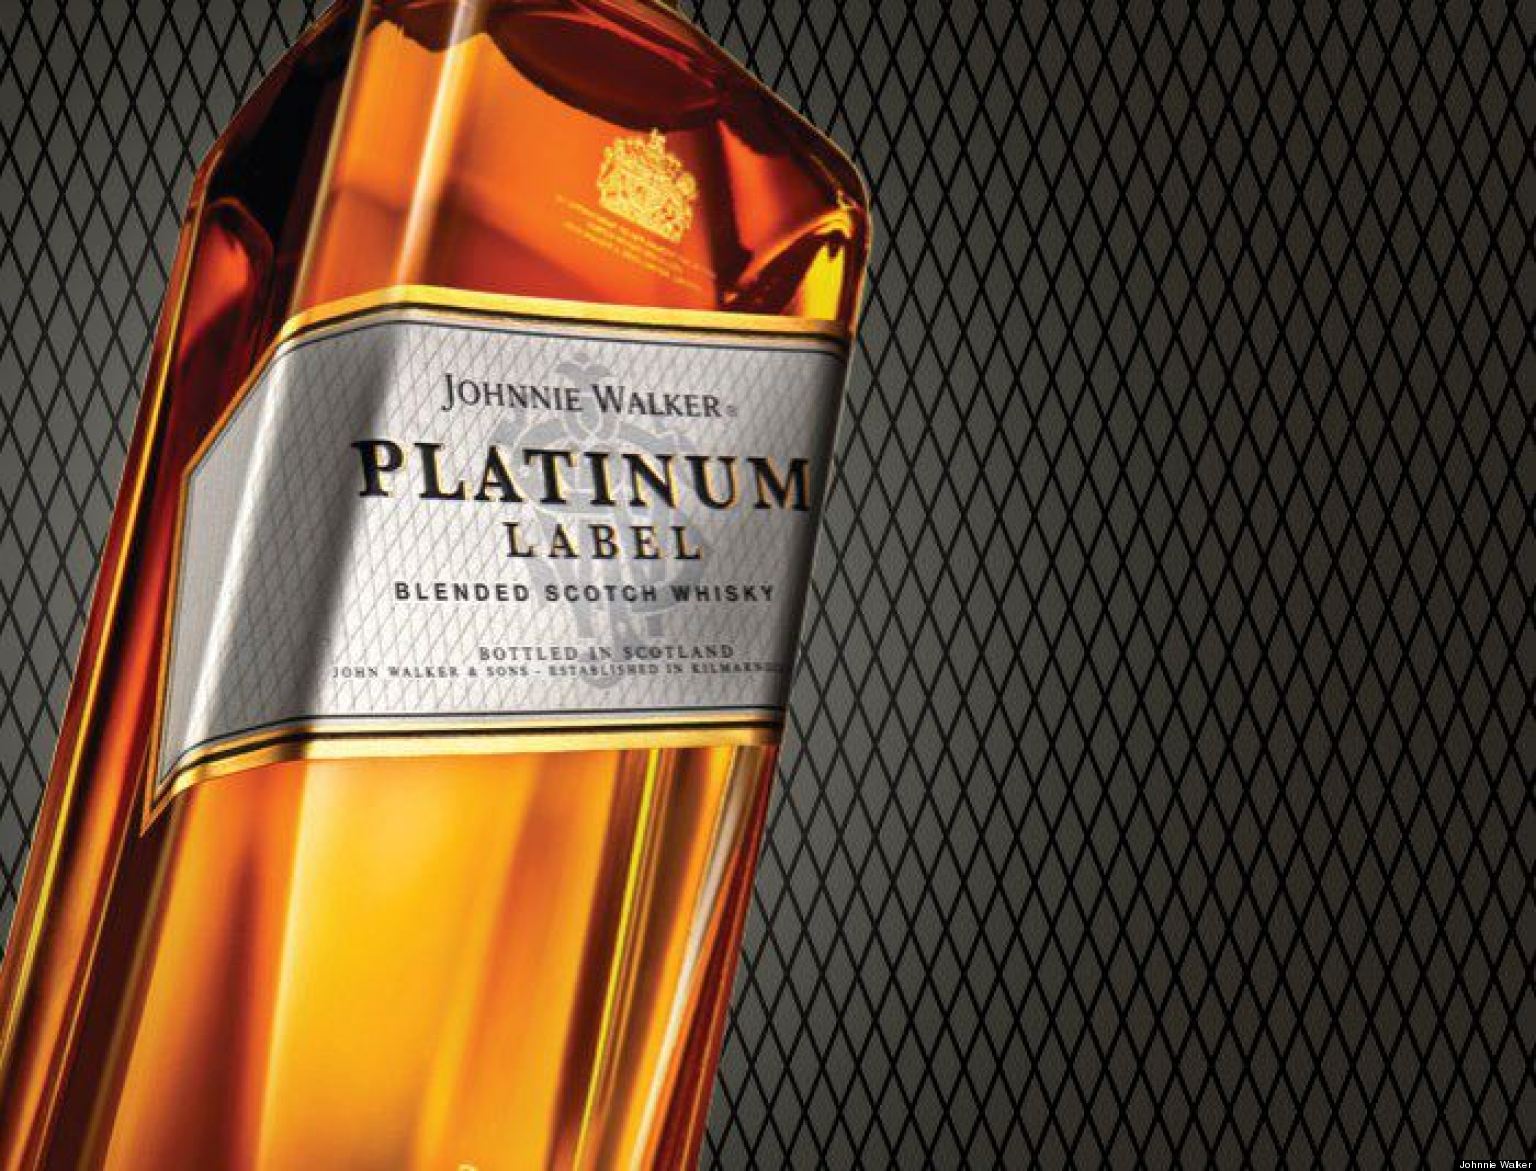 Johnnie Walker's 'One Bottle' Liquor Shop For Its Platinum